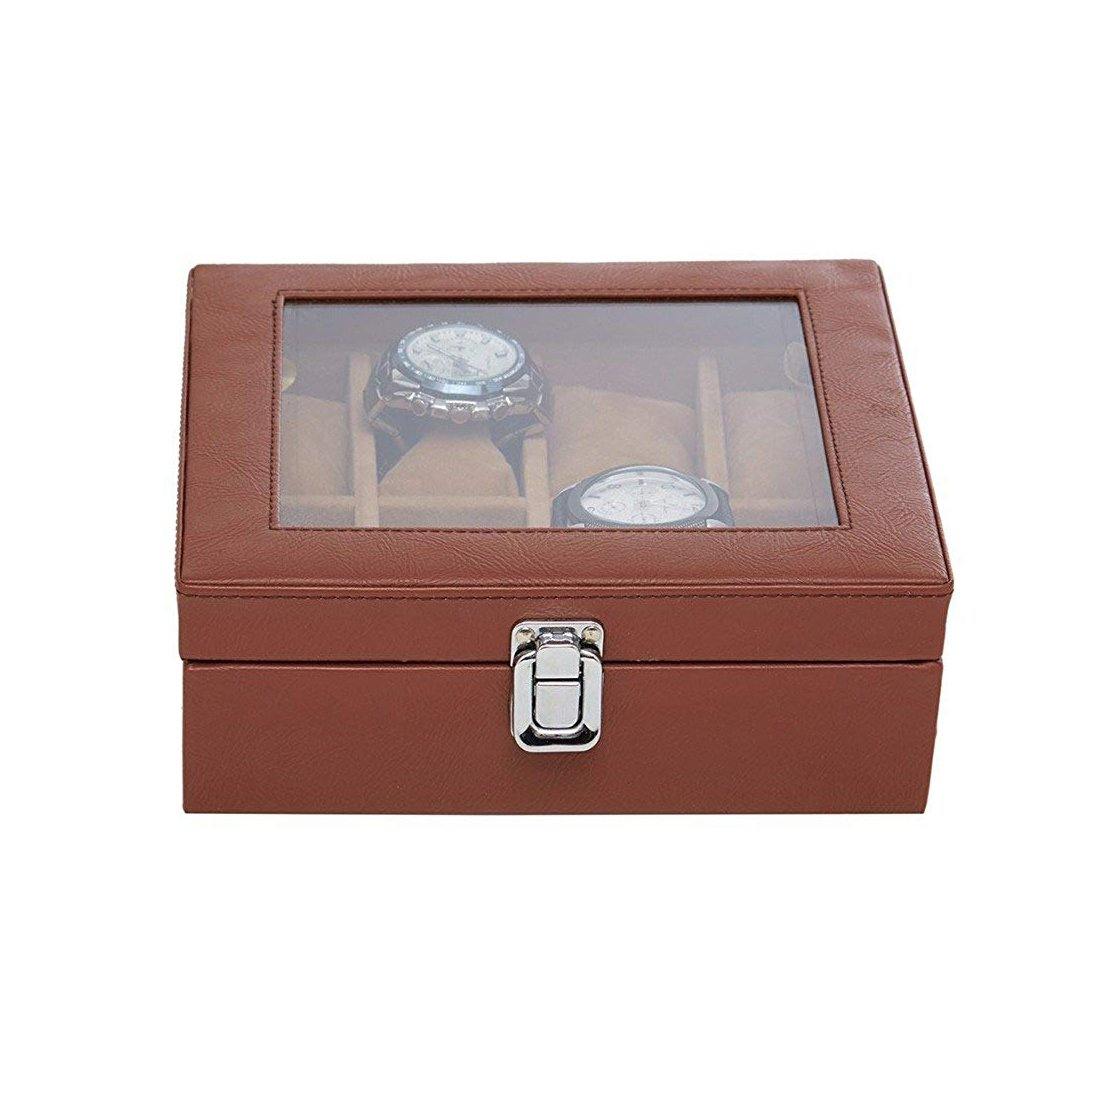 8 Slot Unisex Sleek Watch Organizer Box With Viewing Window